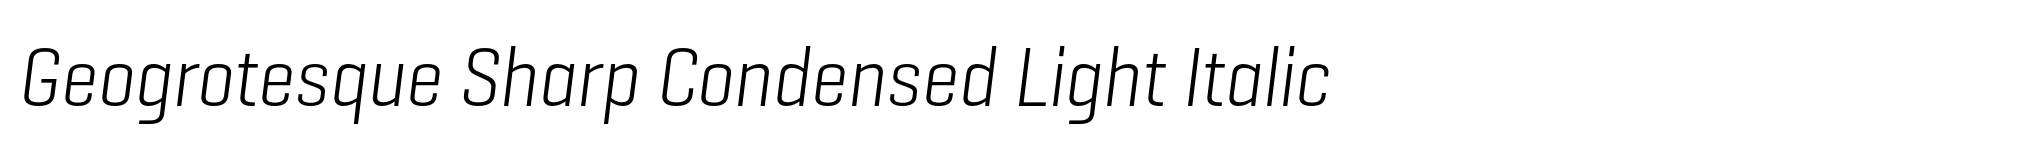 Geogrotesque Sharp Condensed Light Italic image